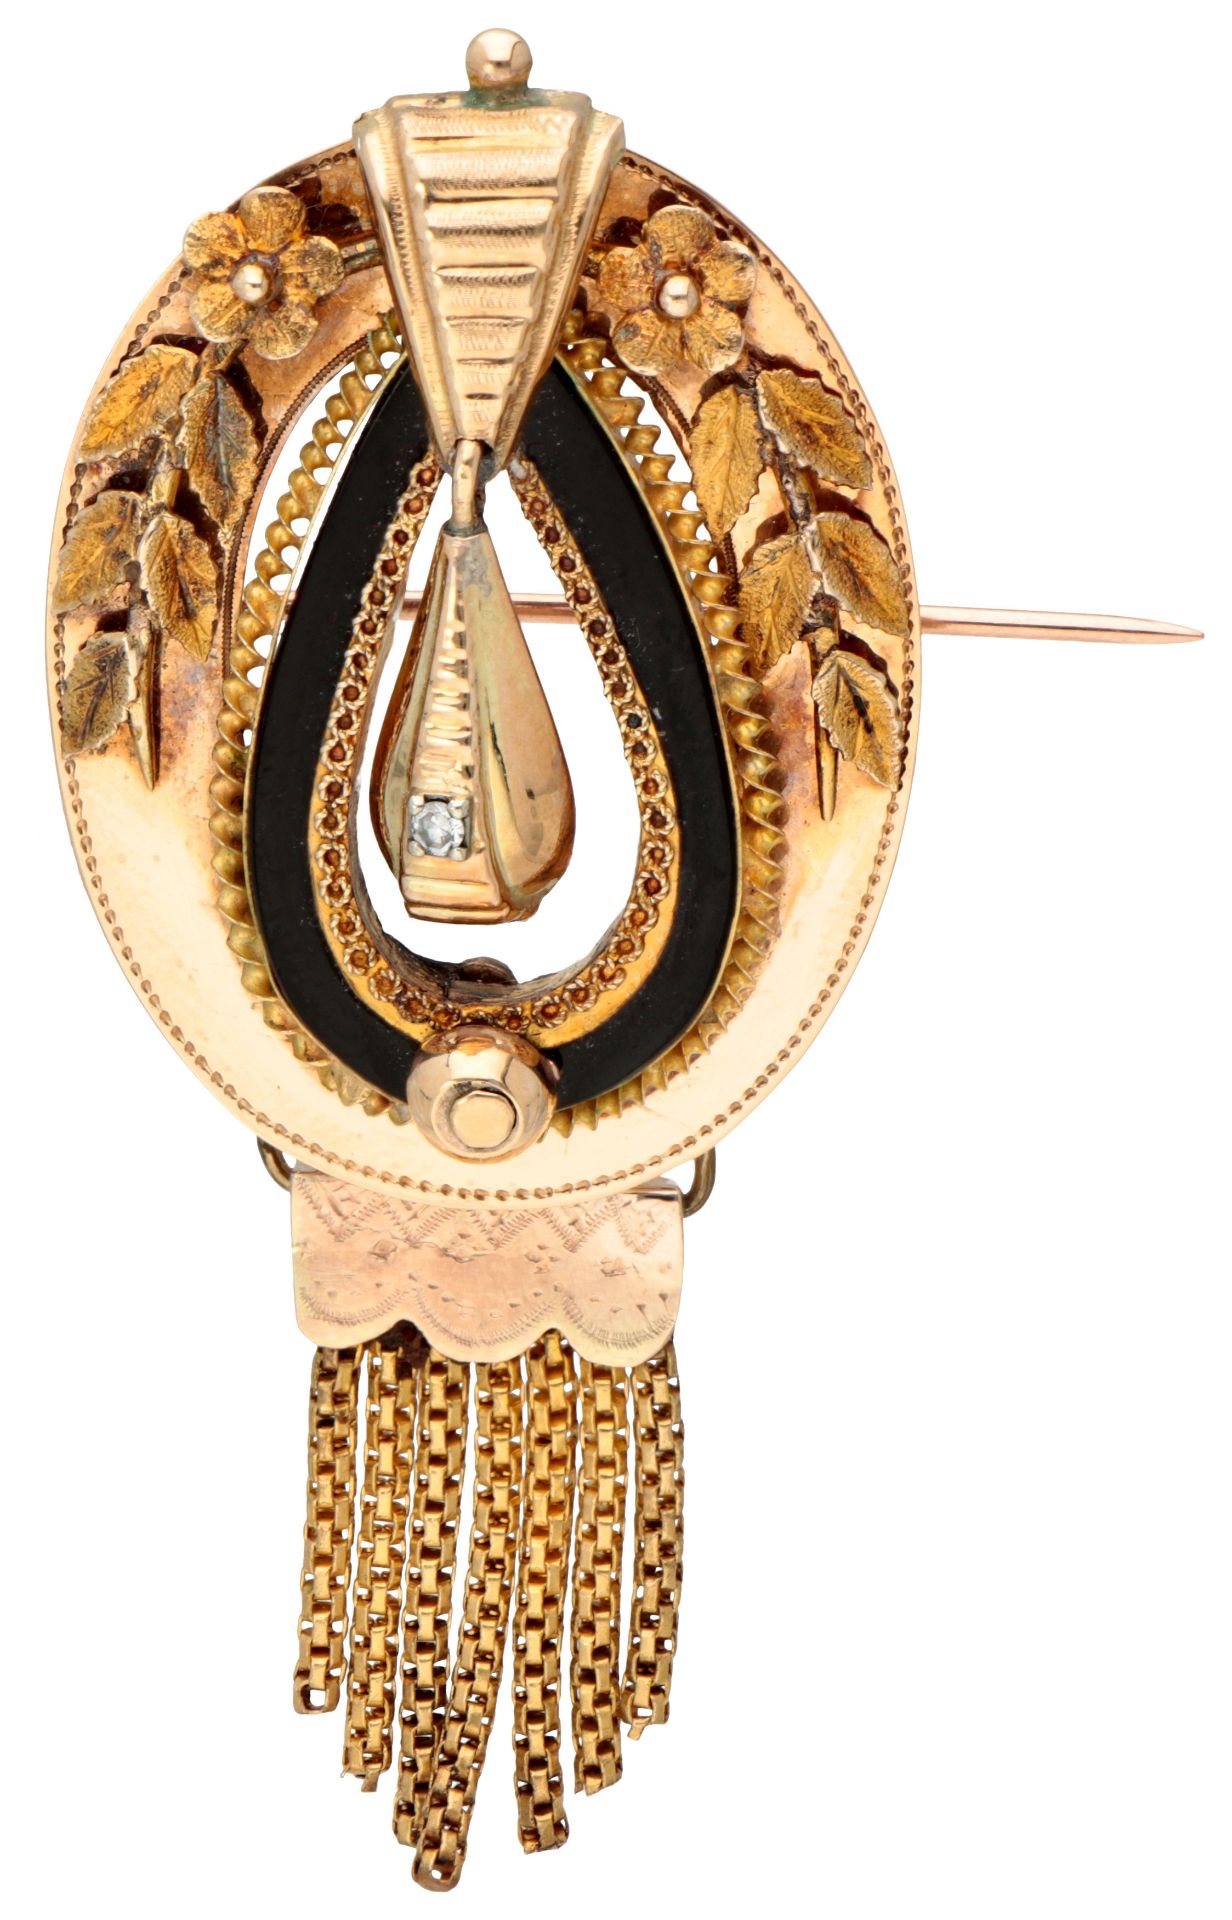 Antique 14K bicolour gold brooch with floral details and 'beard' fringe.